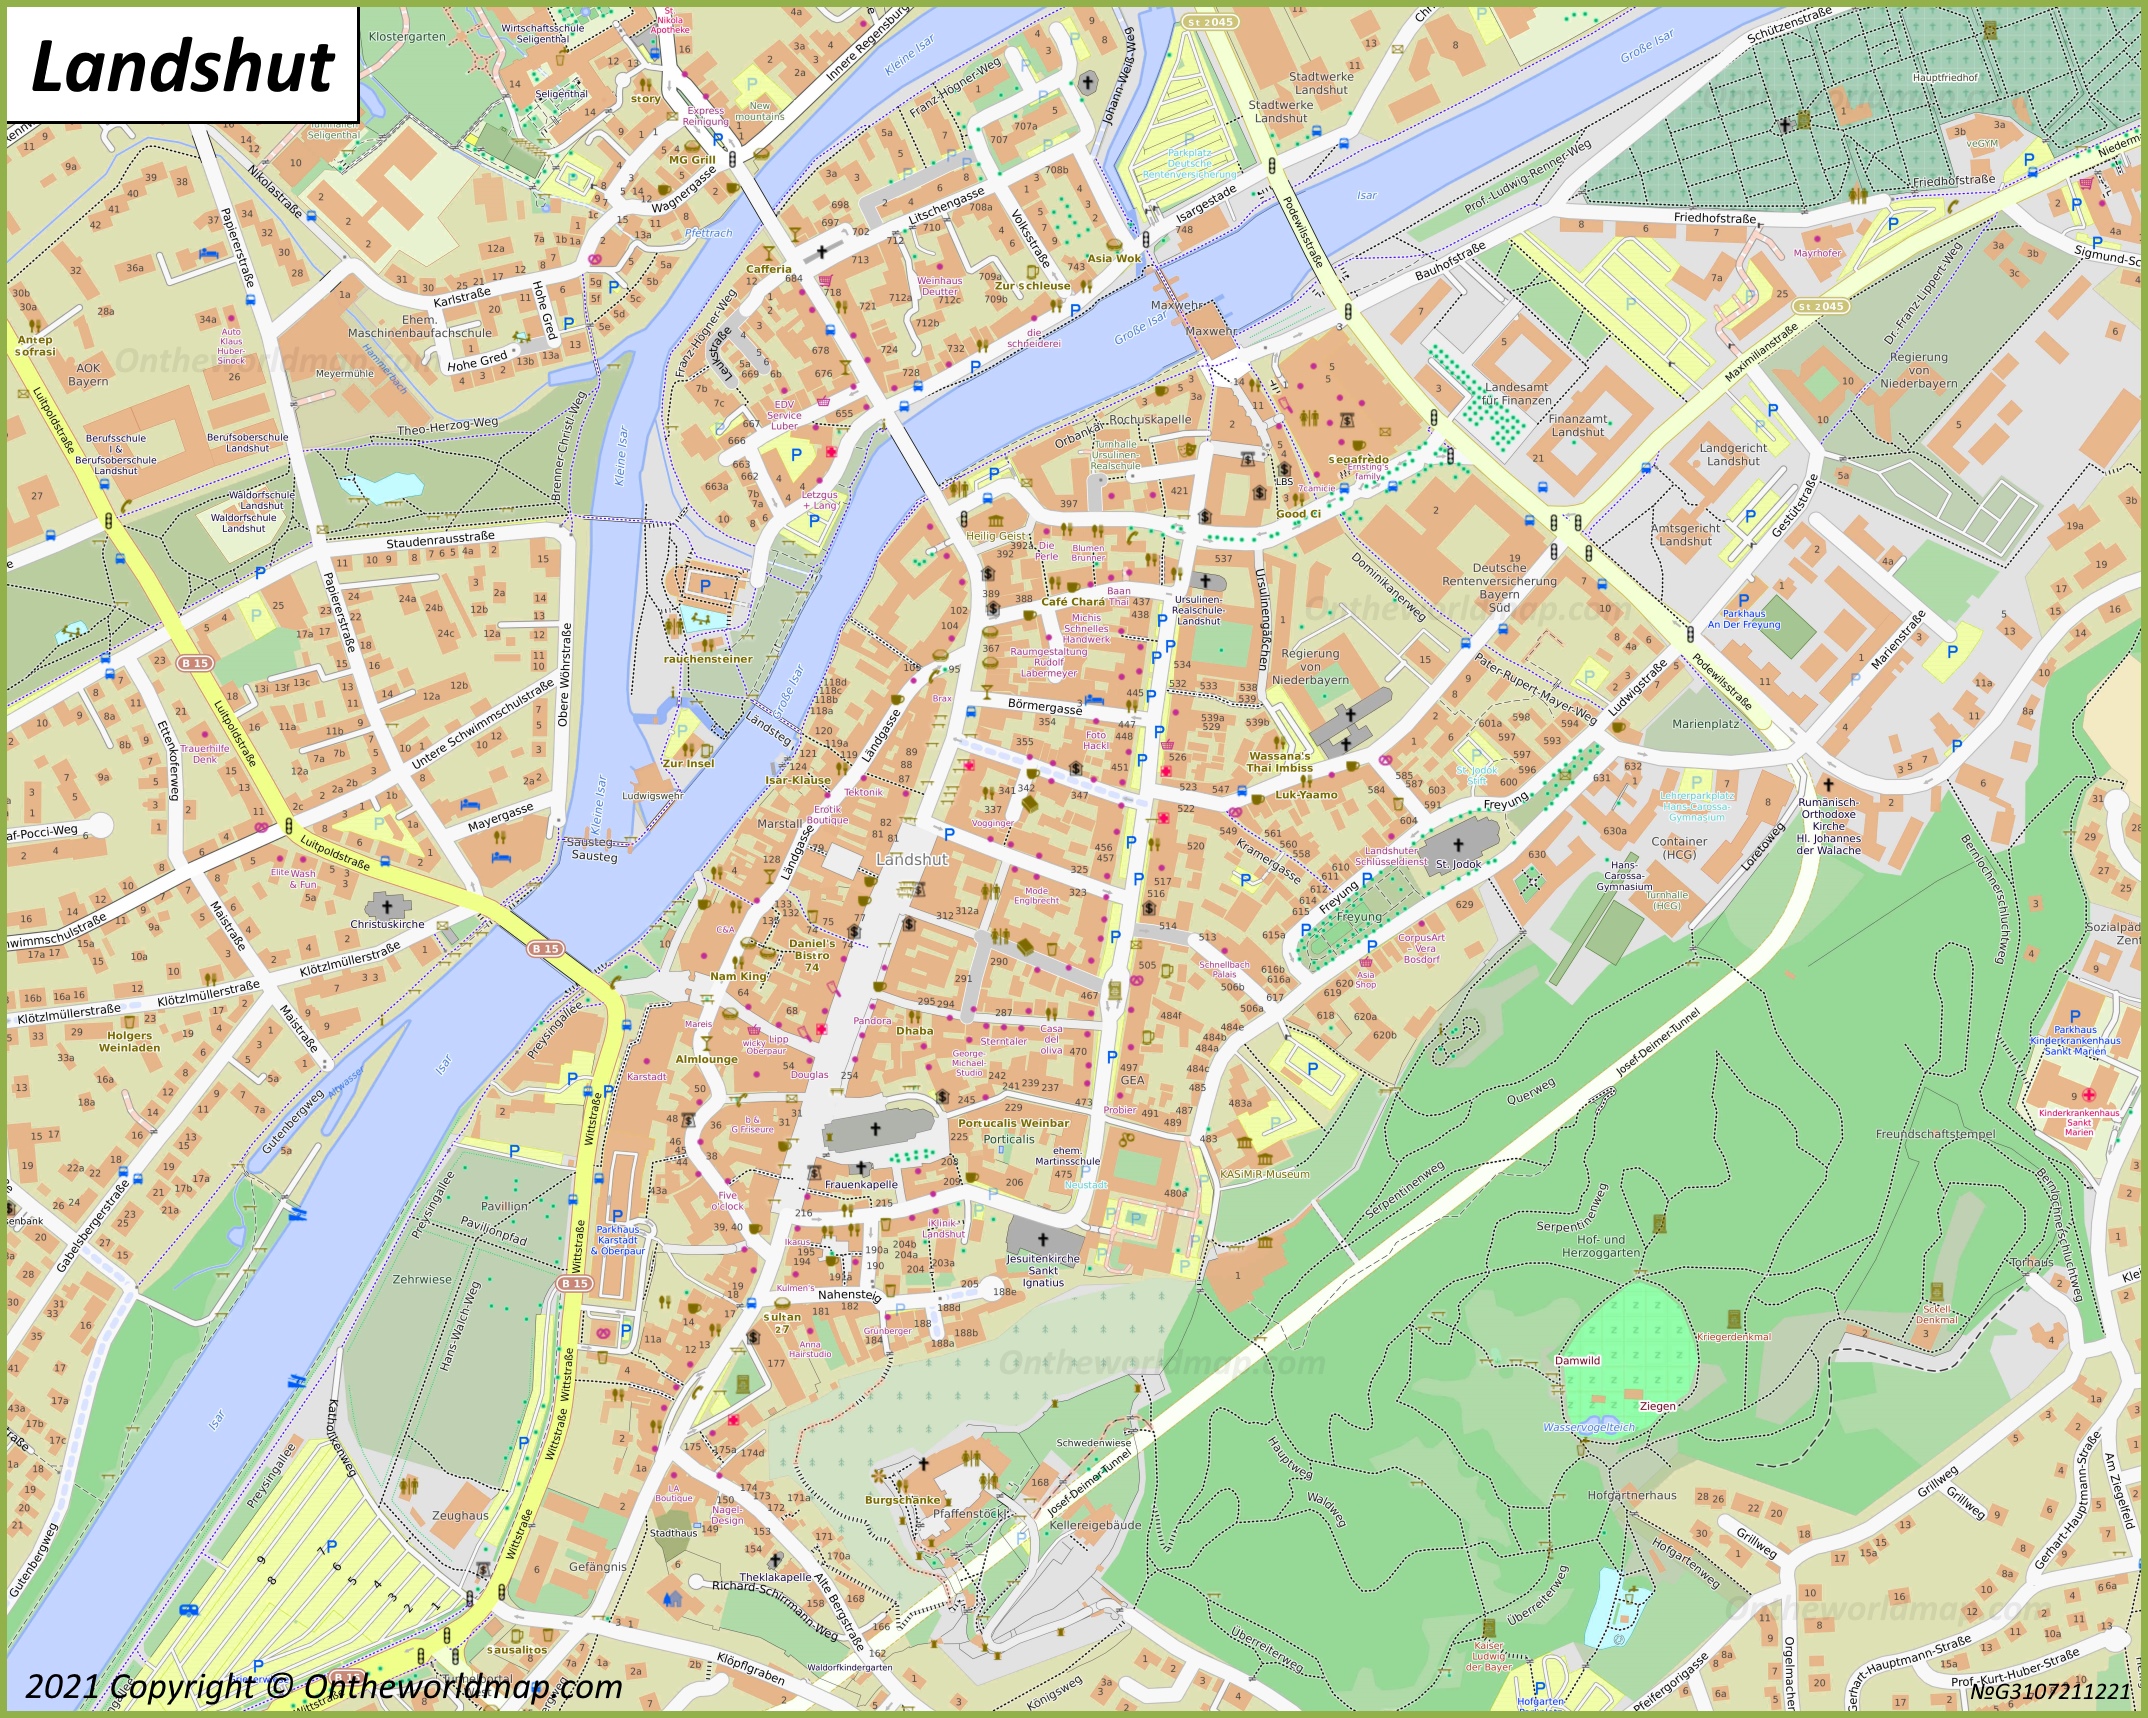 Landshut Old Town Map